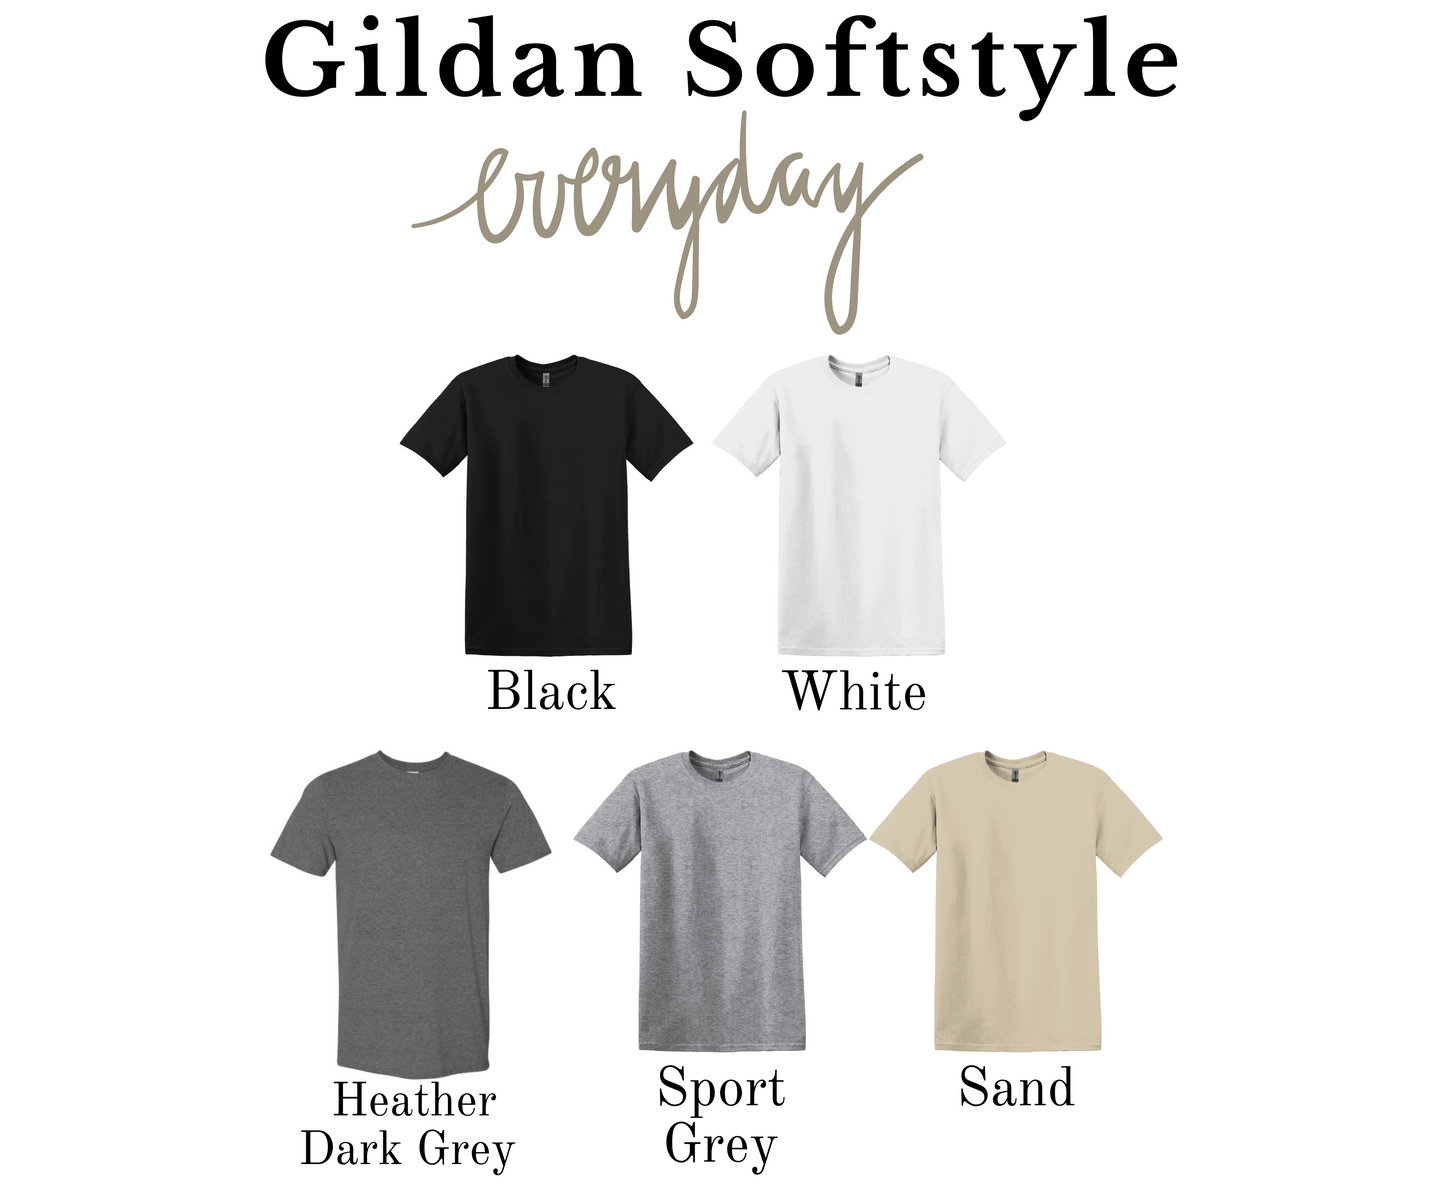 Howdy Fall Checker Gildan Softstyle T-shirt